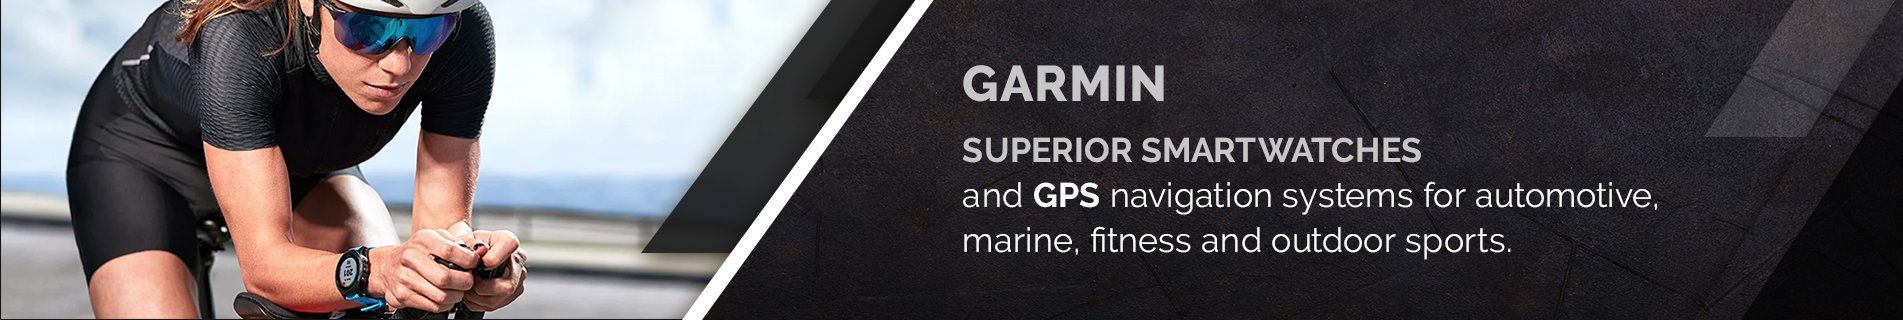 Garmin GPS Systems | Authorized Dealer | Secure Payment